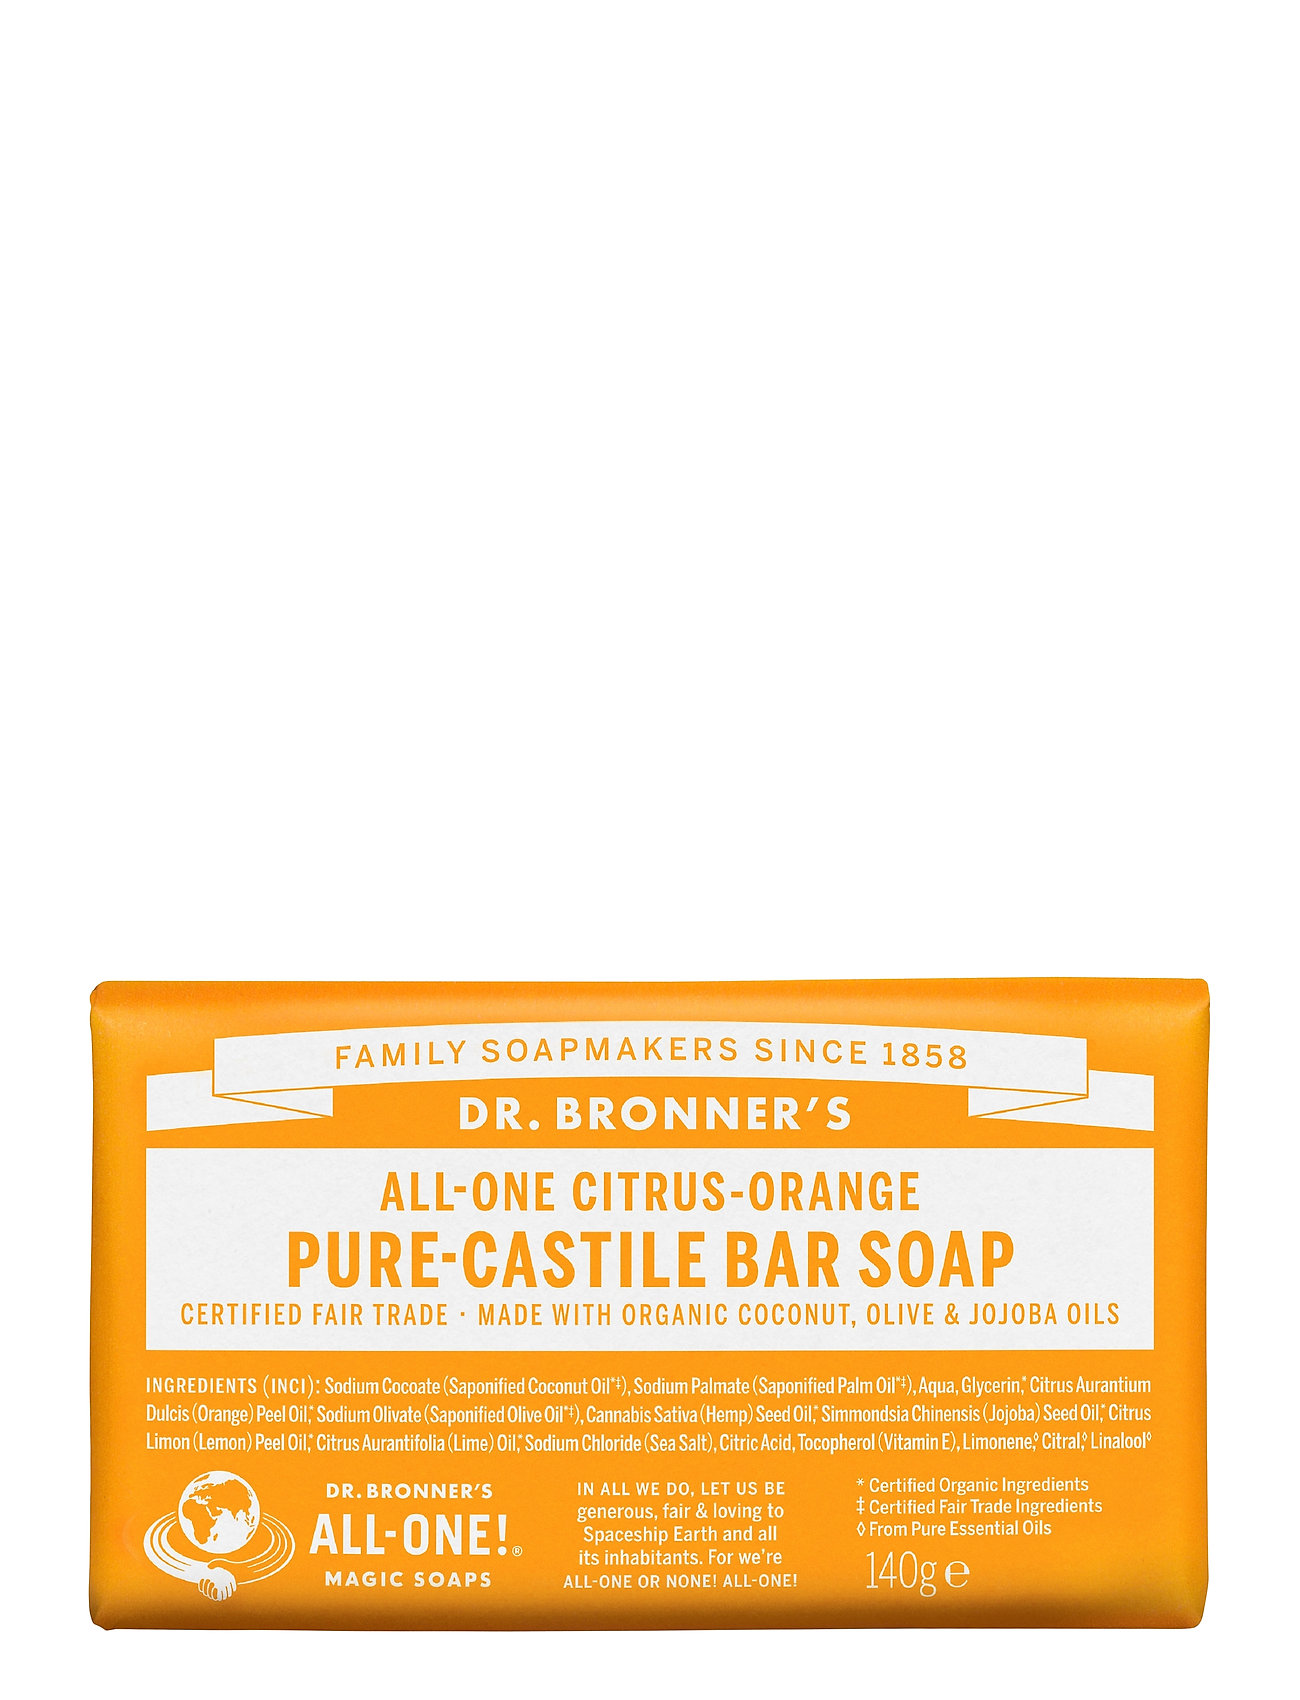 Pure-Castile Bar Soap Citrus-Orange Beauty Women Home Hand Soap Soap Bars Nude Dr. Bronner’s